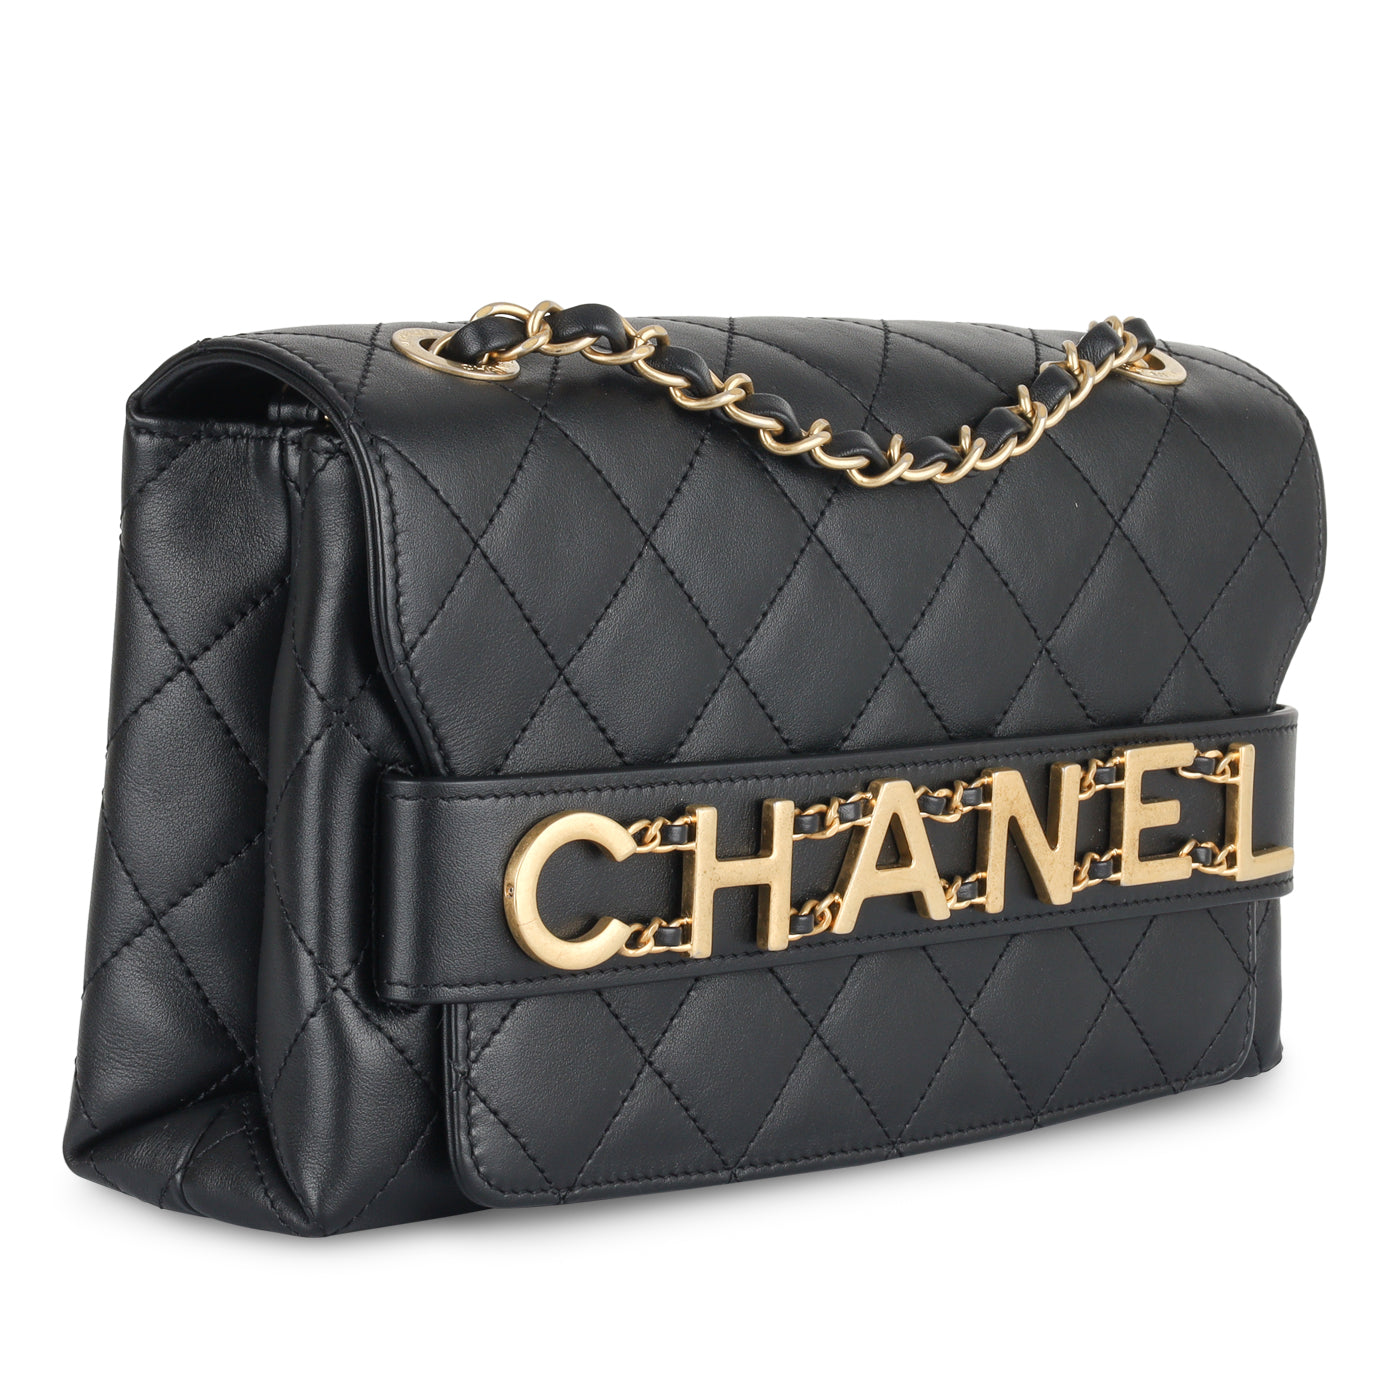 Chanel - Enchained Flap Bag - Black Lambskin GHW - Pre-Loved